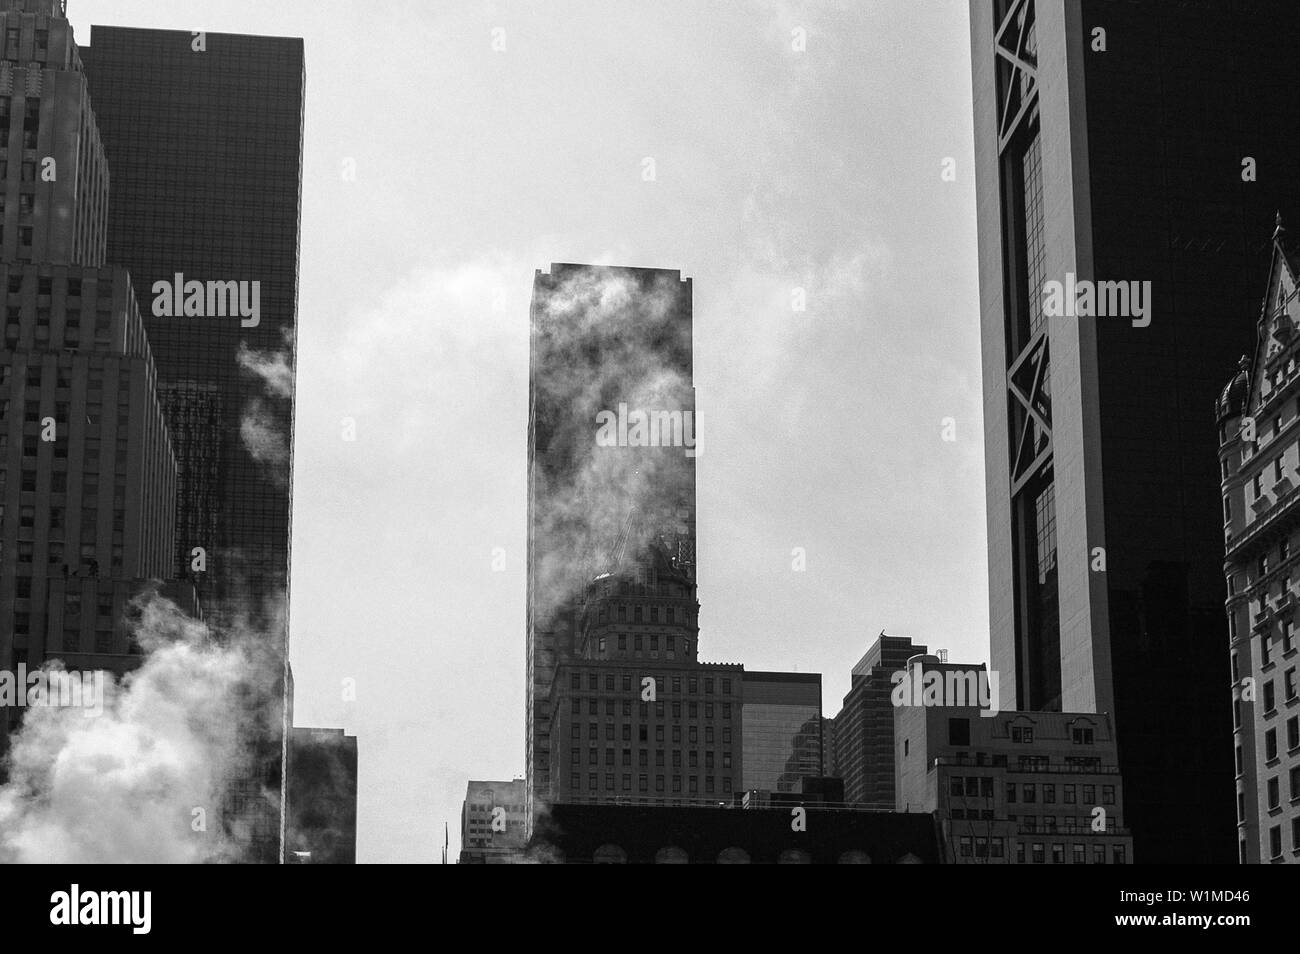 New Zork through a KONICA MINOLTA DIGITAL CAMERA with a black and white filter Stock Photo